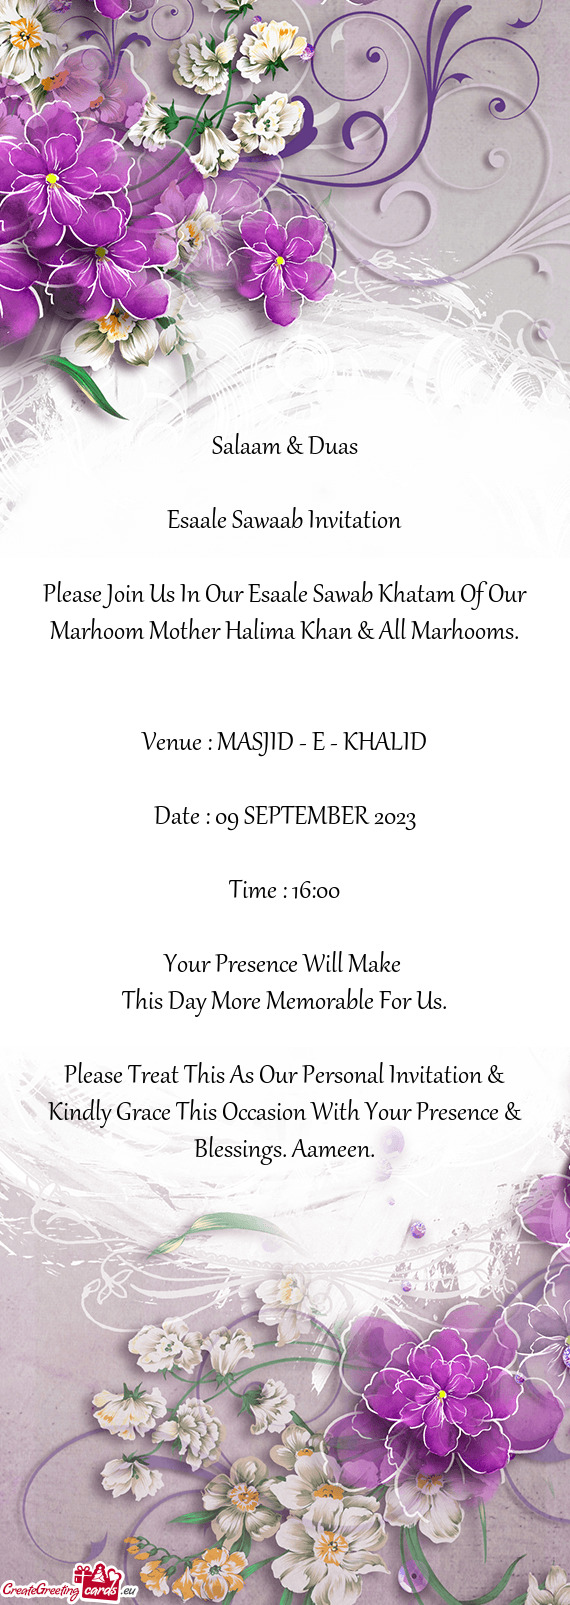 Please Join Us In Our Esaale Sawab Khatam Of Our Marhoom Mother Halima Khan & All Marhooms